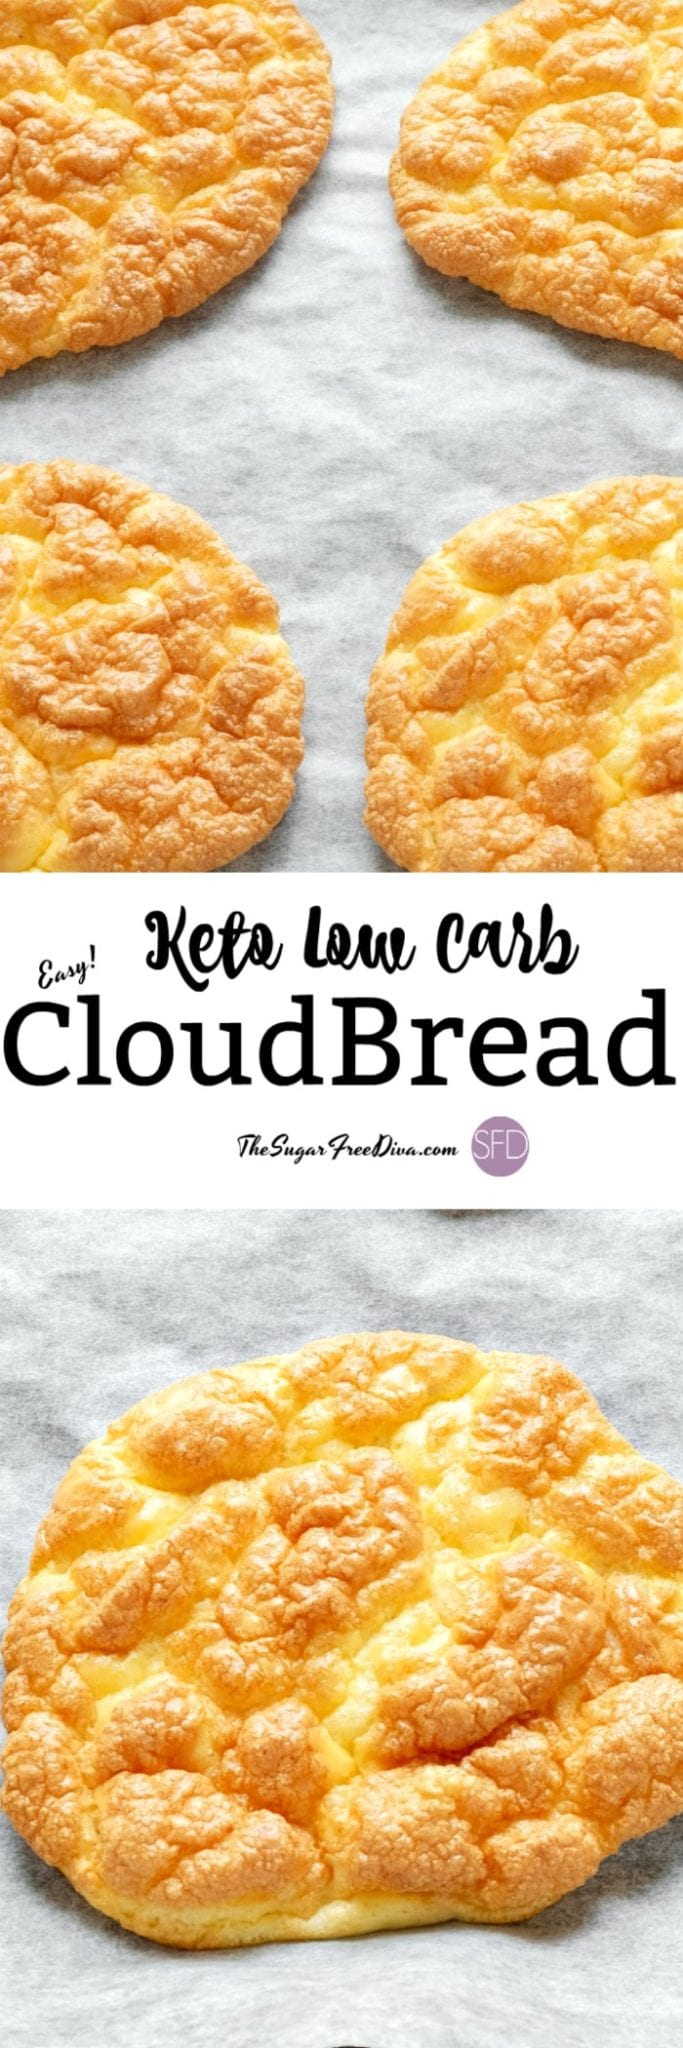 Sugar Free and Keto Cloud Bread